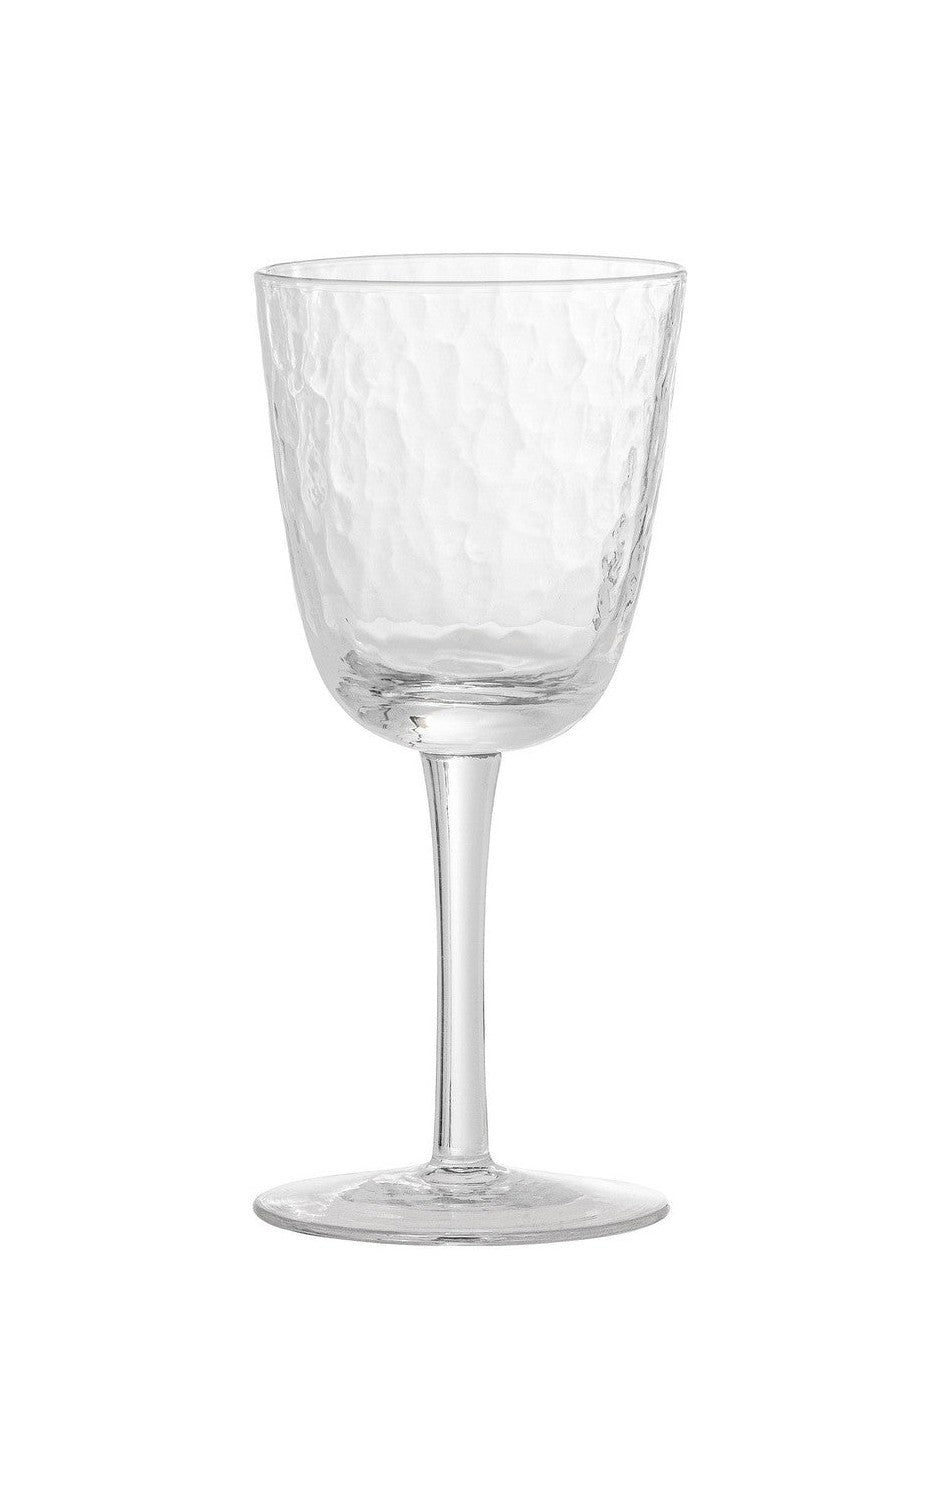 Bloomingville Asali Wine Glass, Clear, Glass